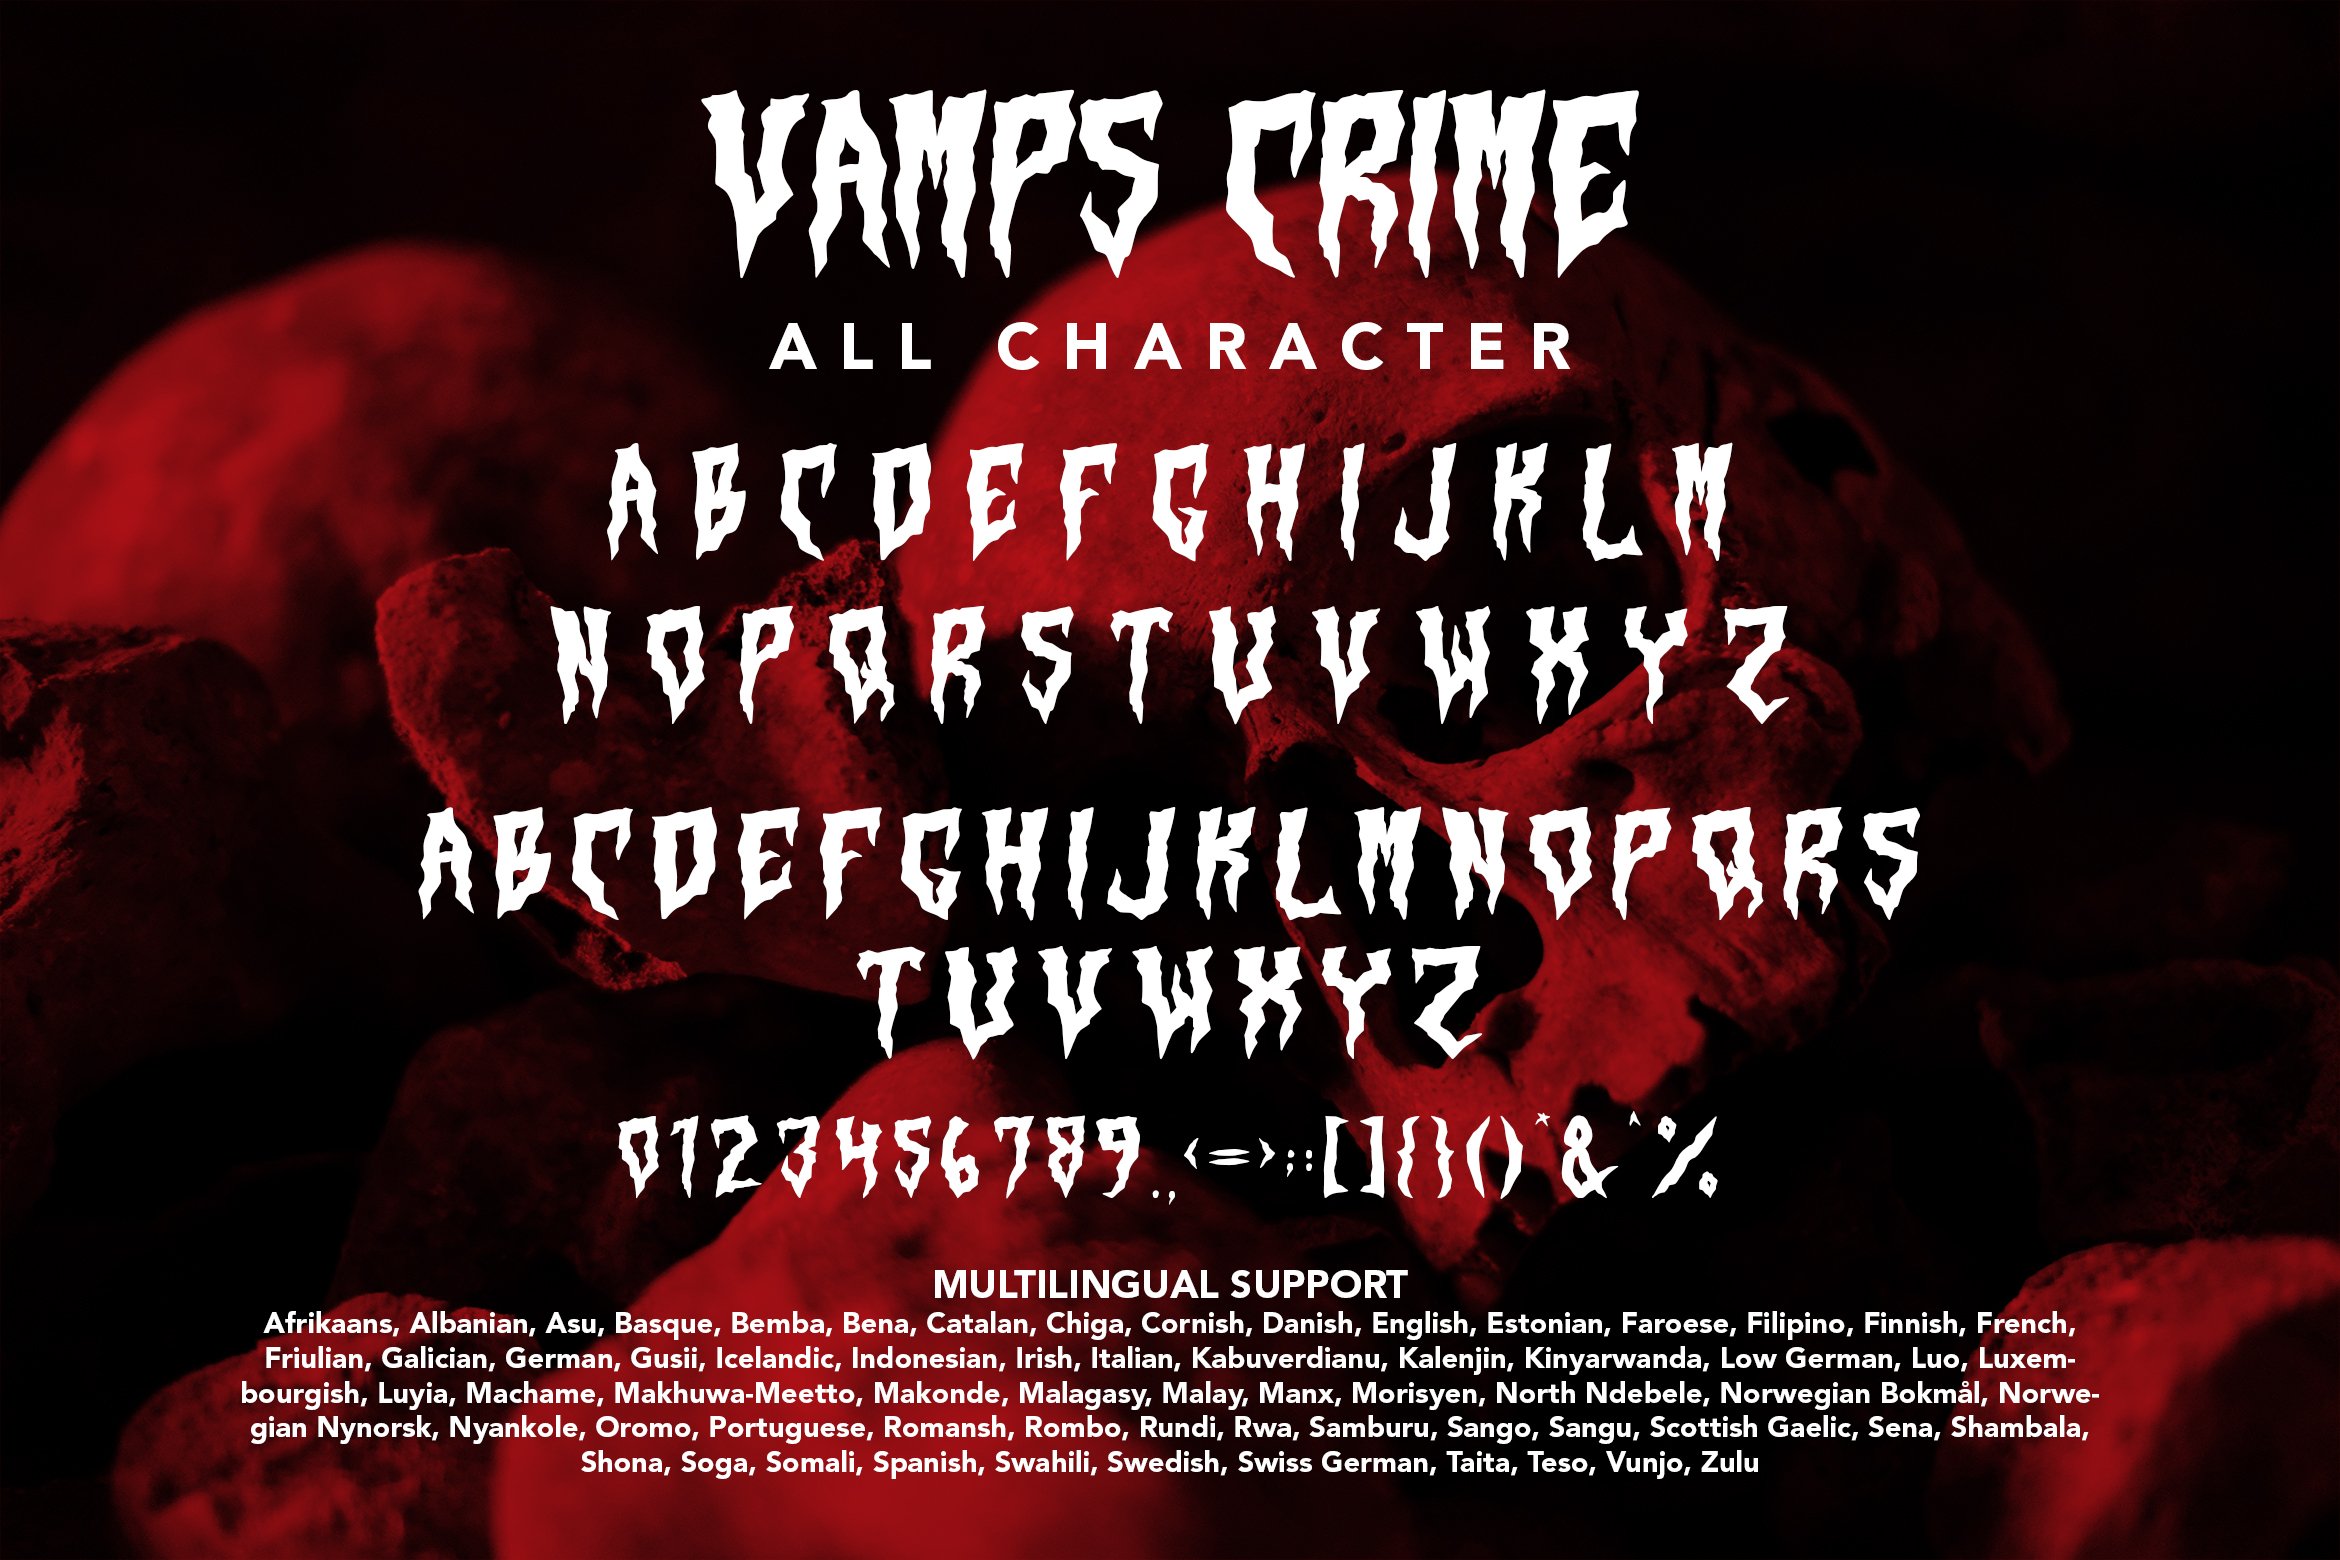 vamps crime 7 539